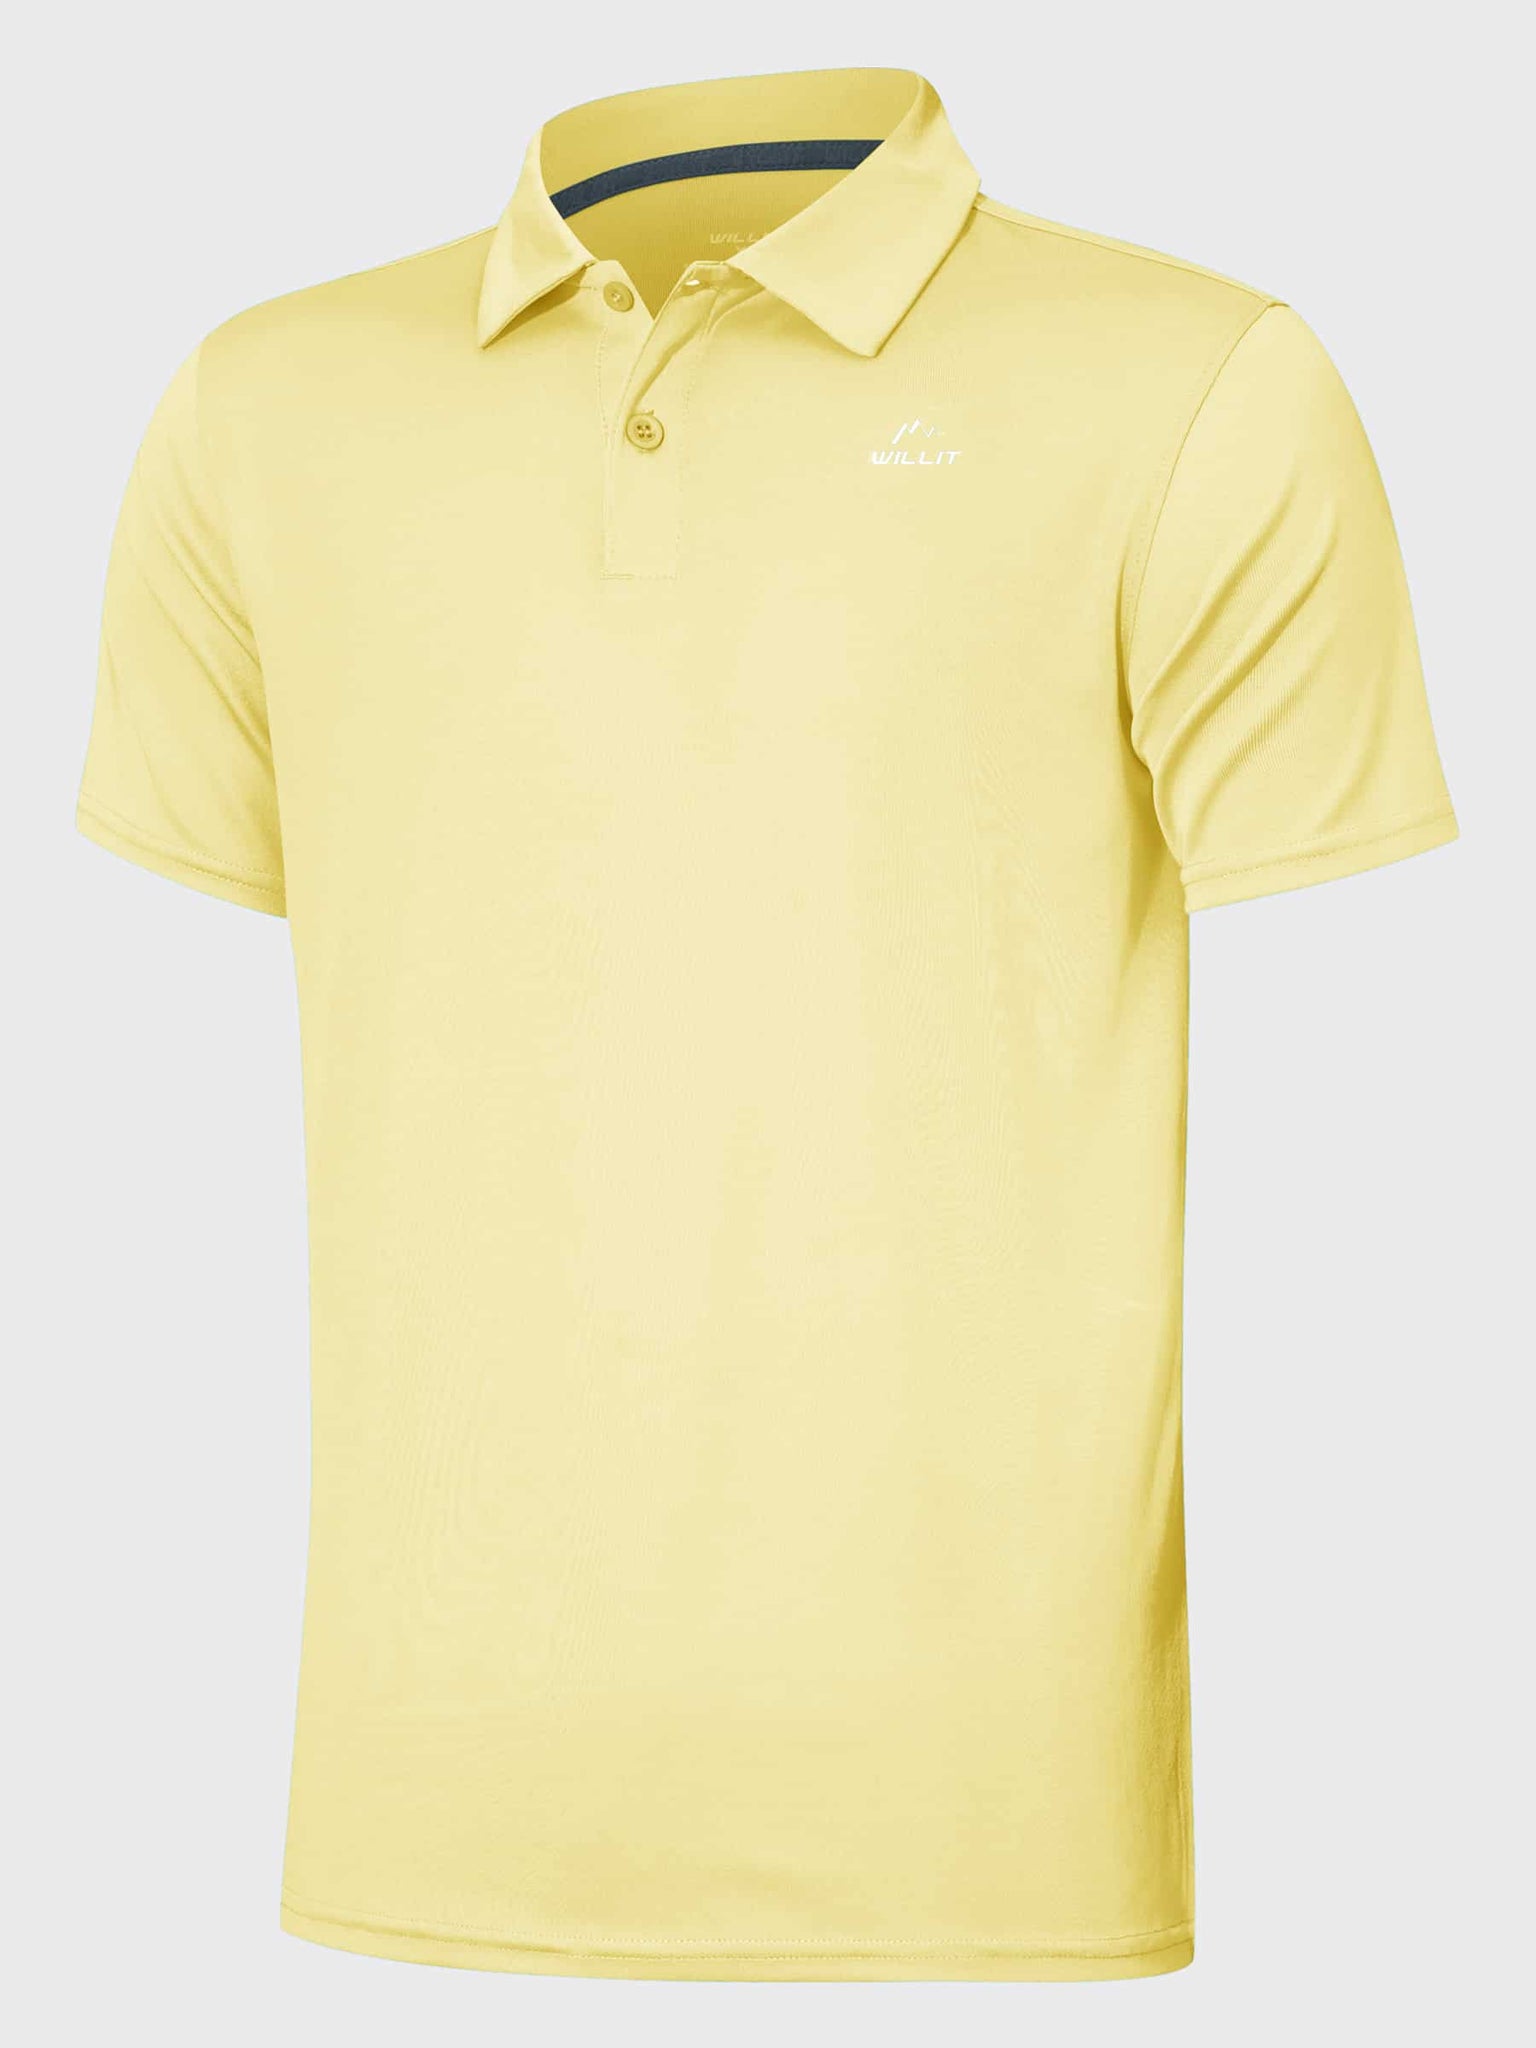 Youth Golf Polo Sun Shirts_Yellow_laydown1